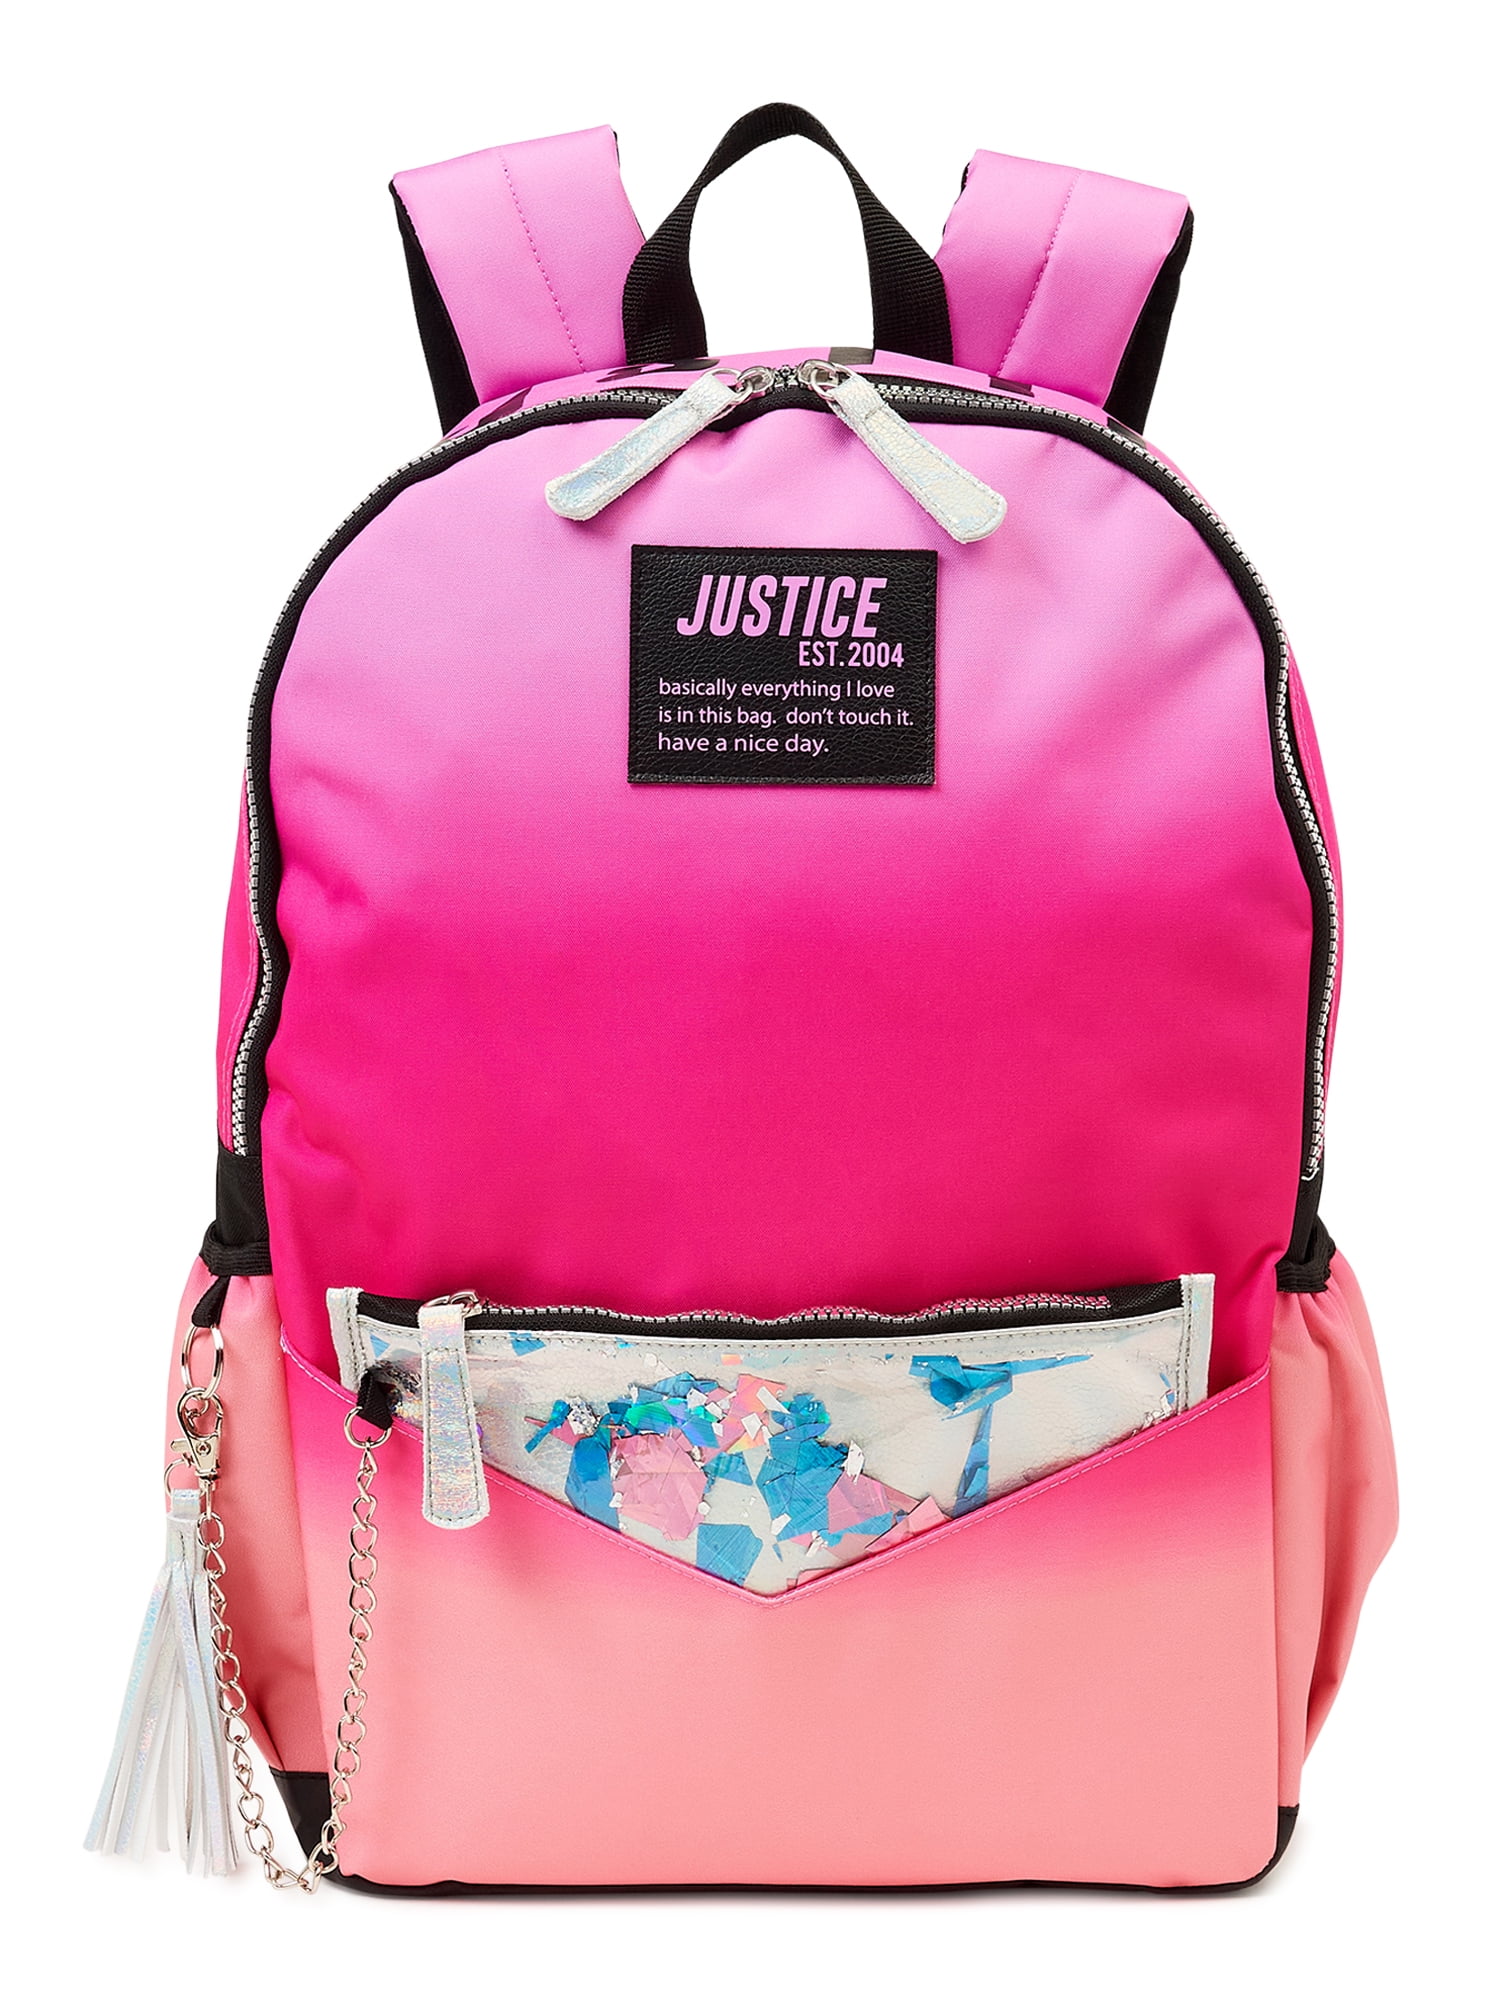 MAPOLO Panda with Triangle Things School Backpack Travel Bag Rucksack College Bookbag Travel Laptop Bag Daypack Bag for Men Women 